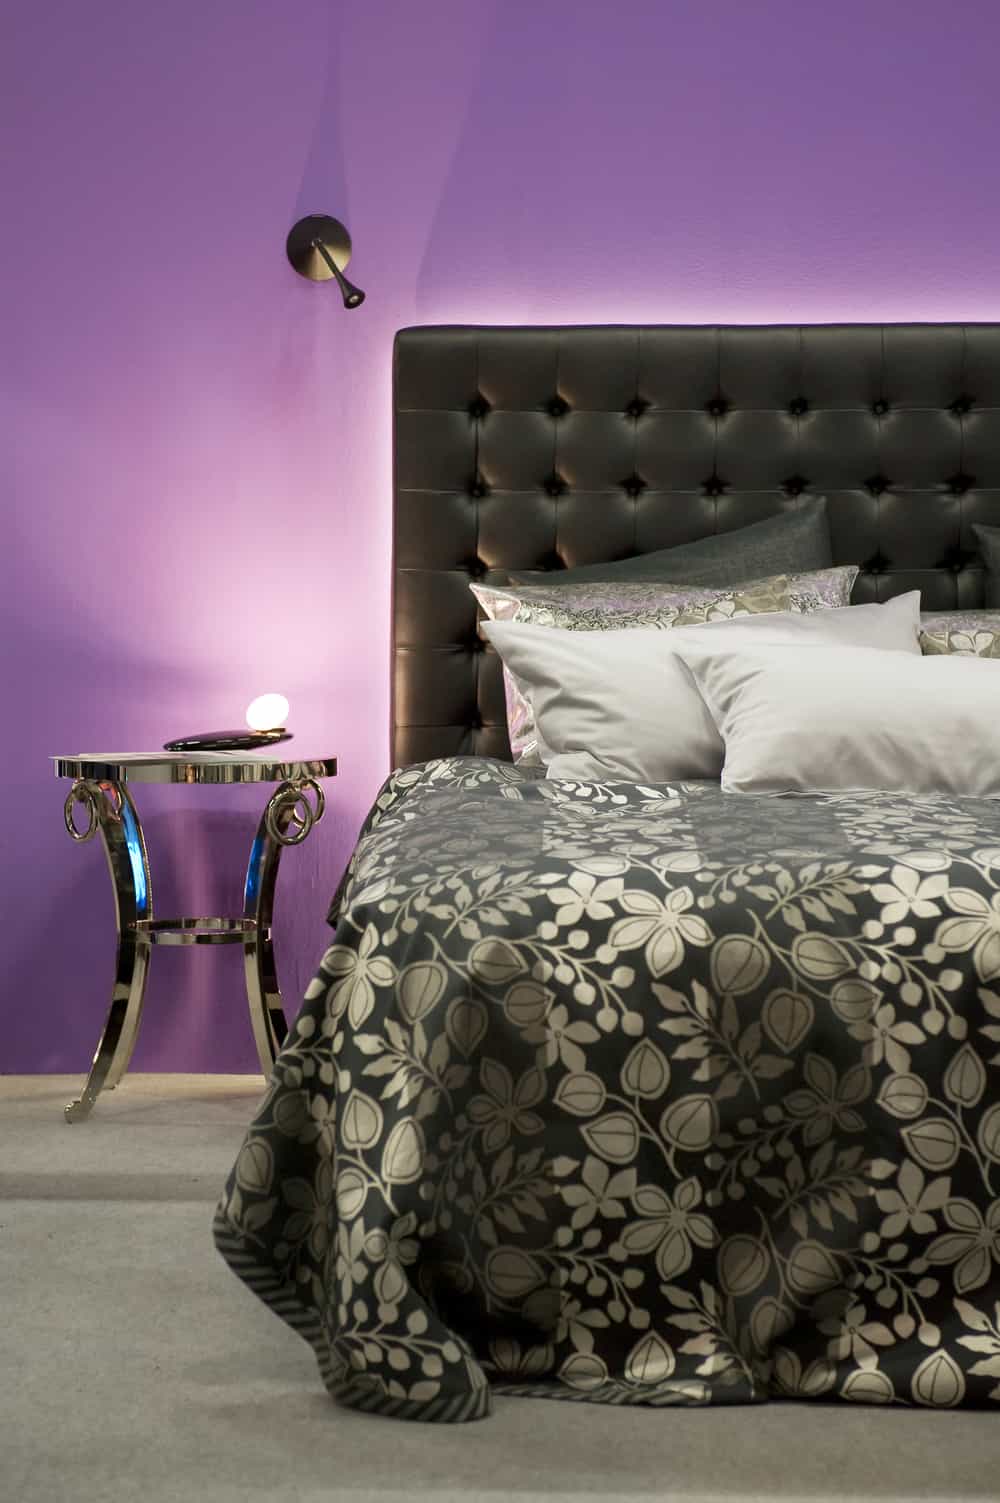 Bett vor einer lilafarbenen Wand Bed in front of a purple wall